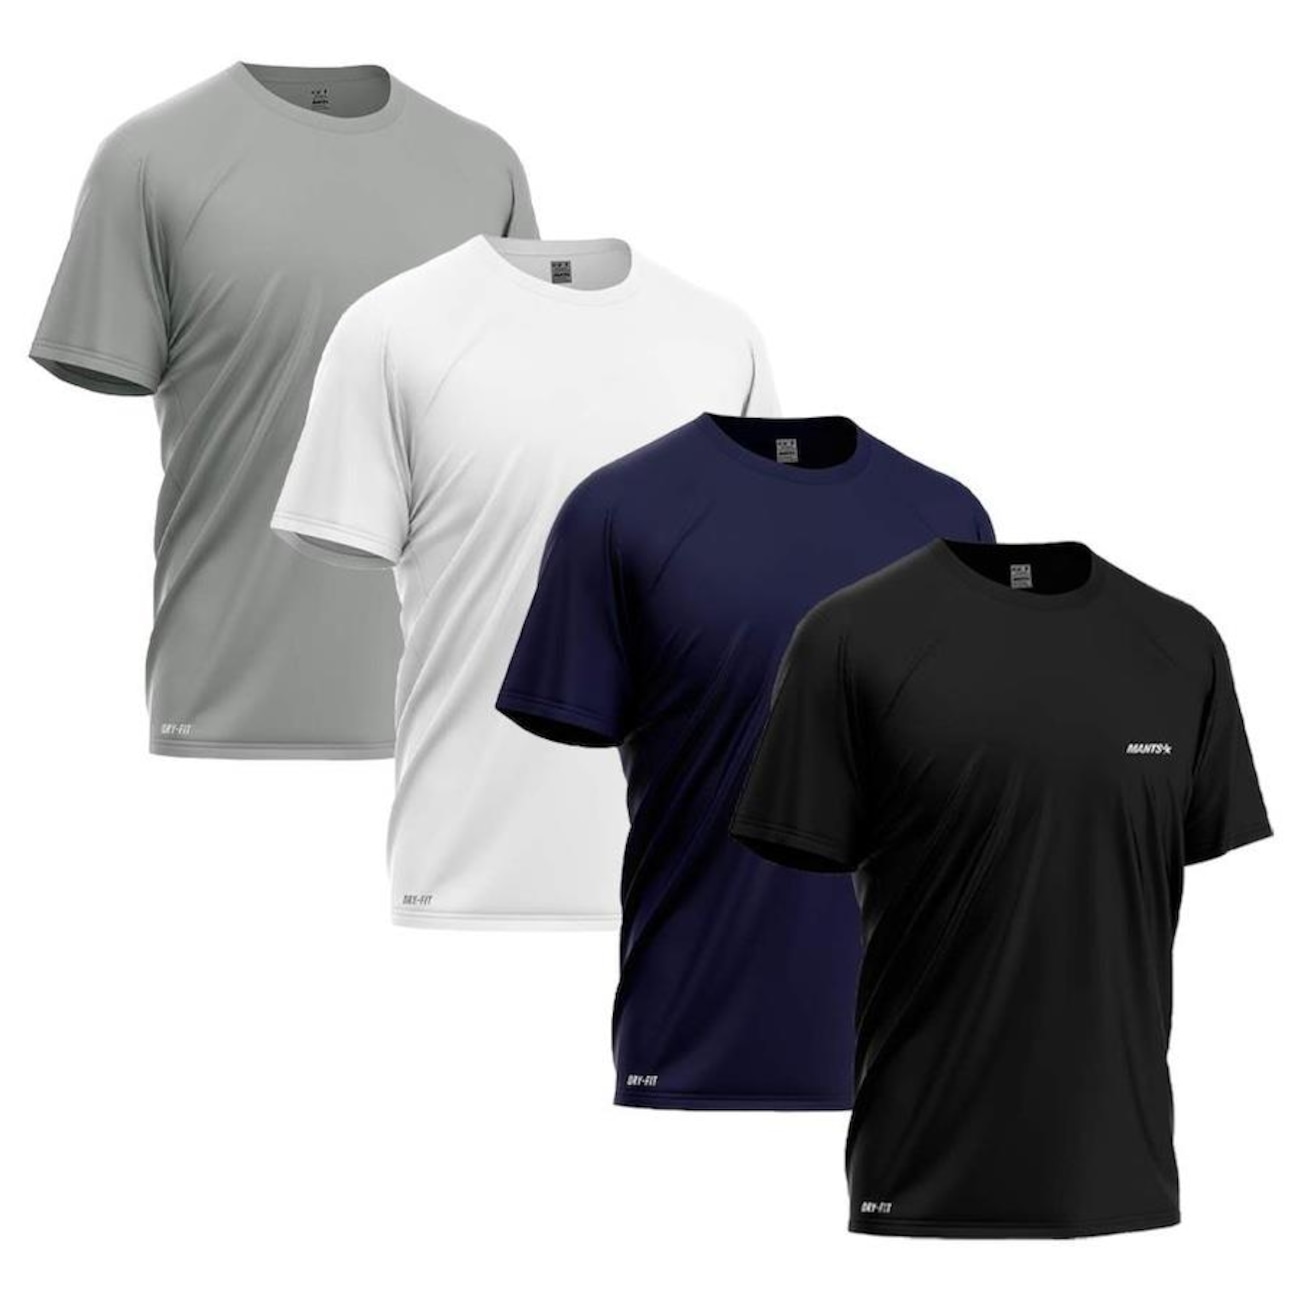 Novo Conjunto de Bermuda e Camiseta Refletiva Dryfit Masculino